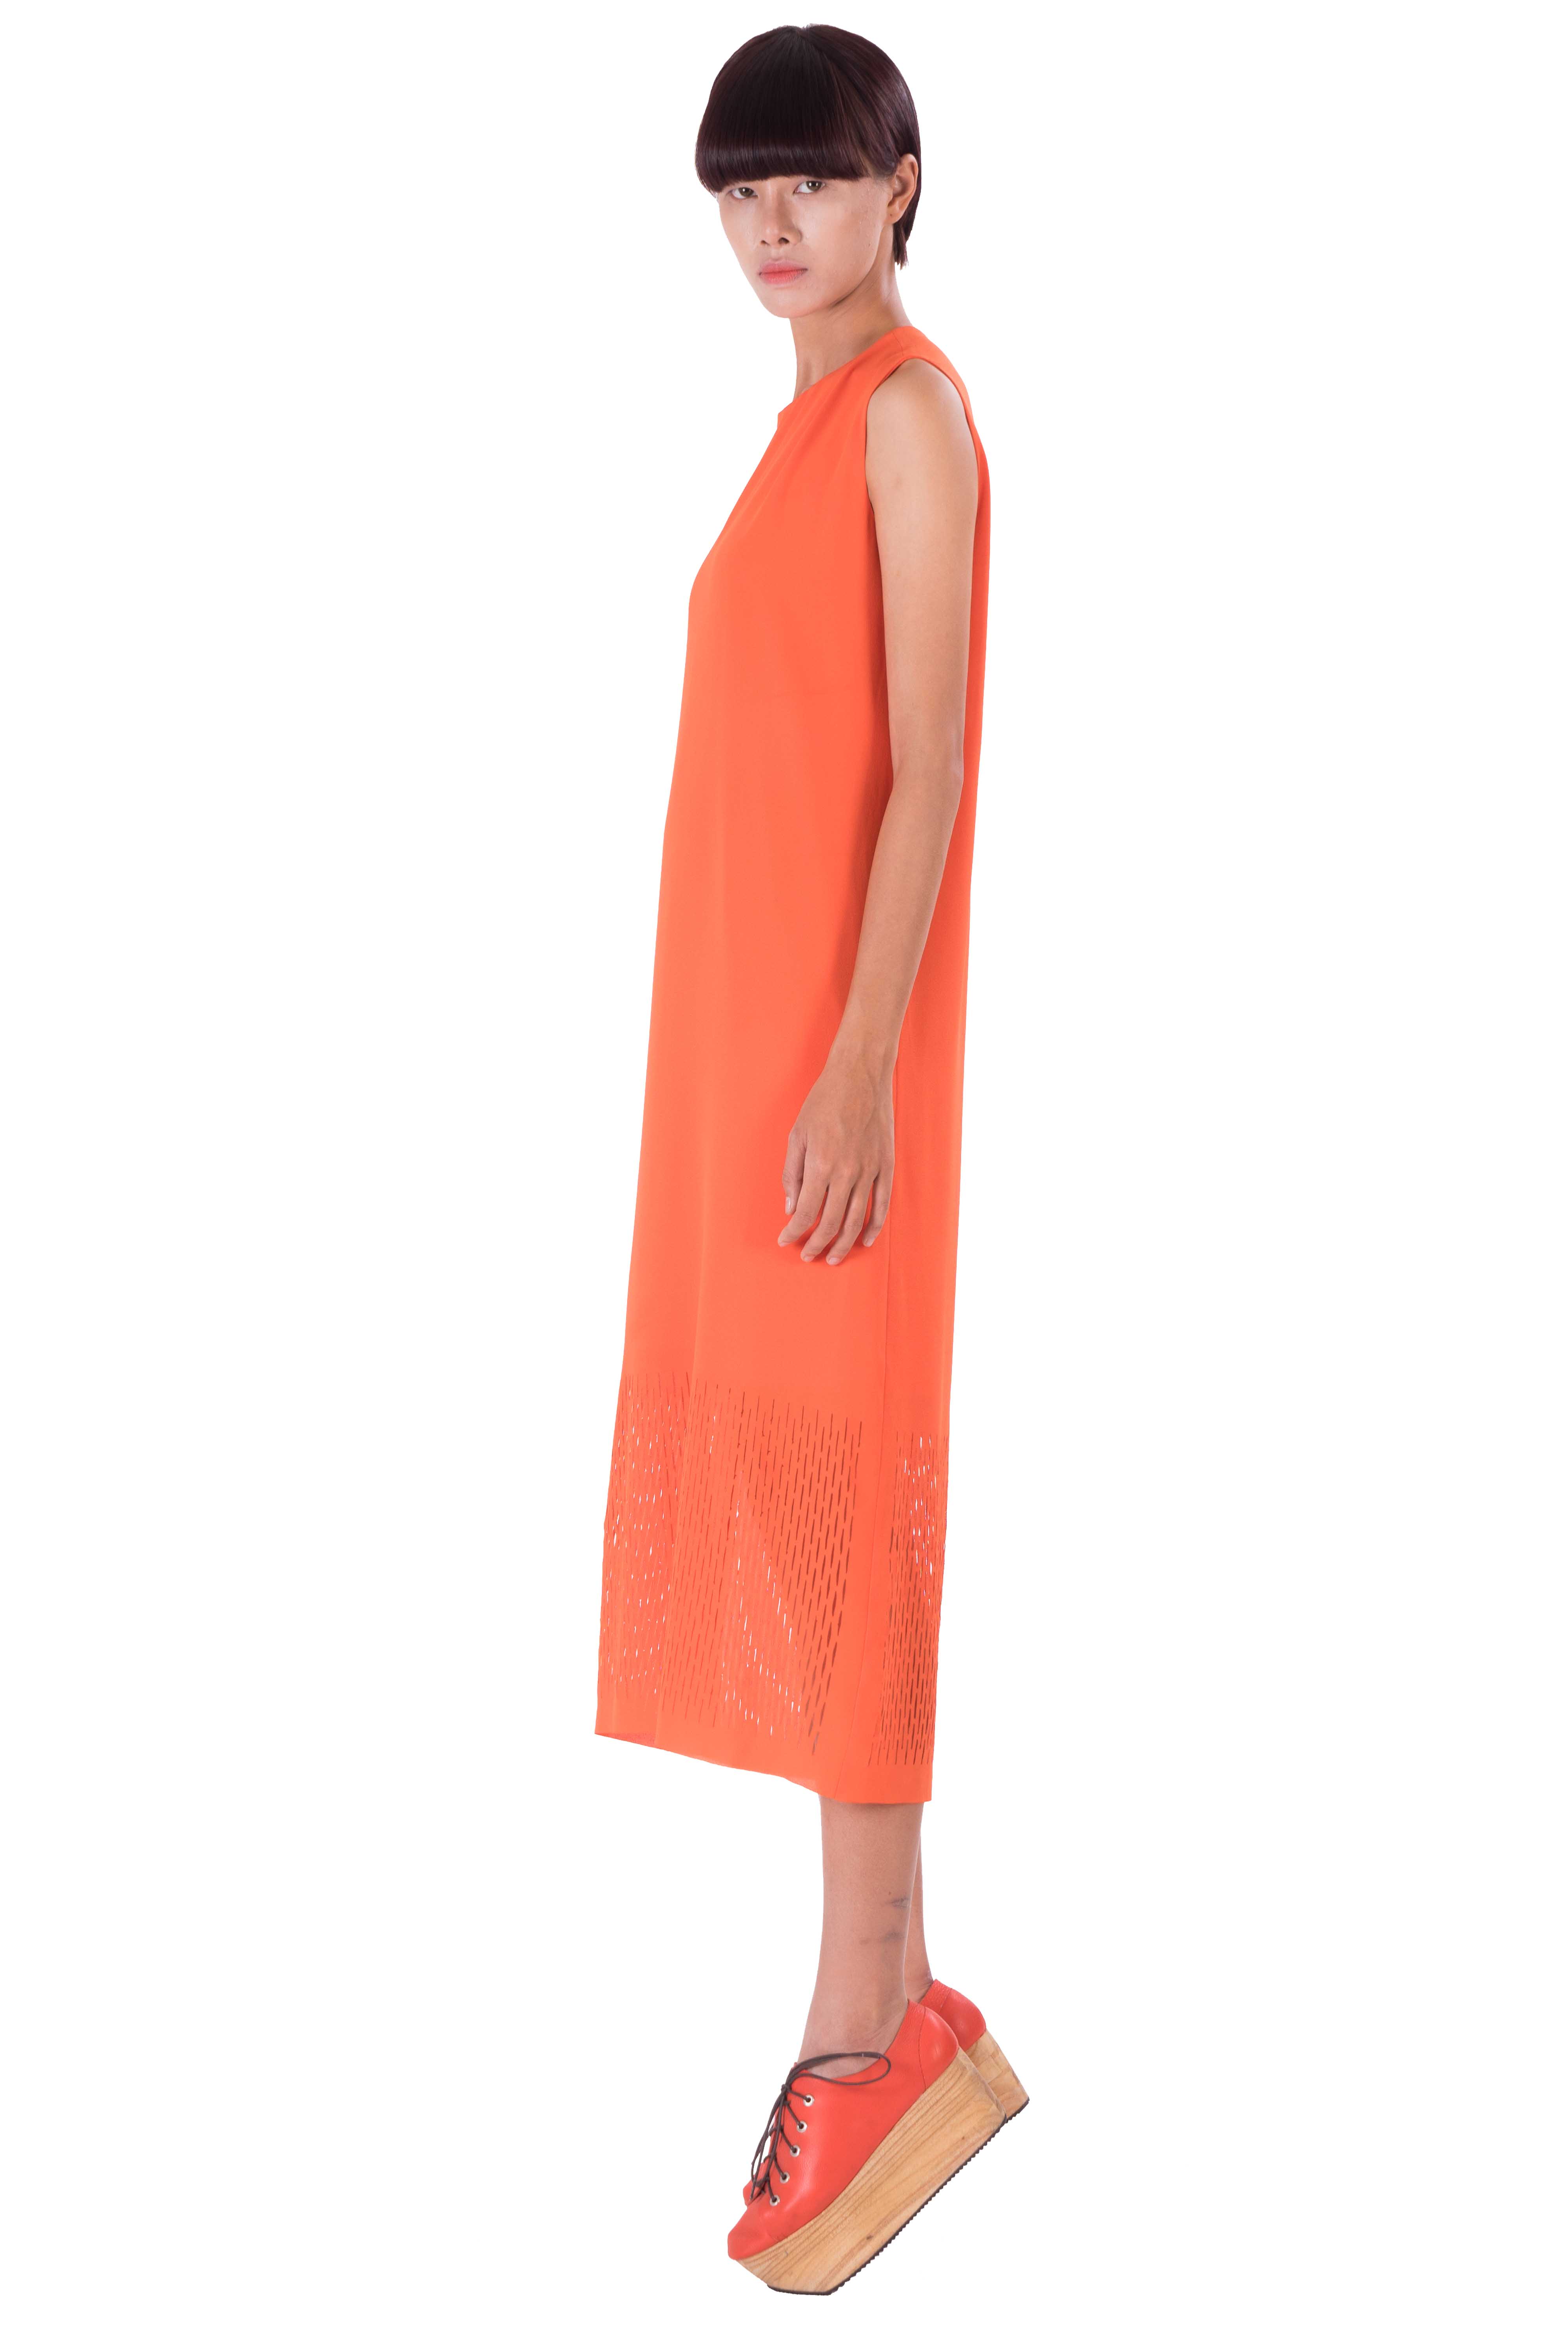 Orange sleeveless loose fit laser detailing dress with lining.